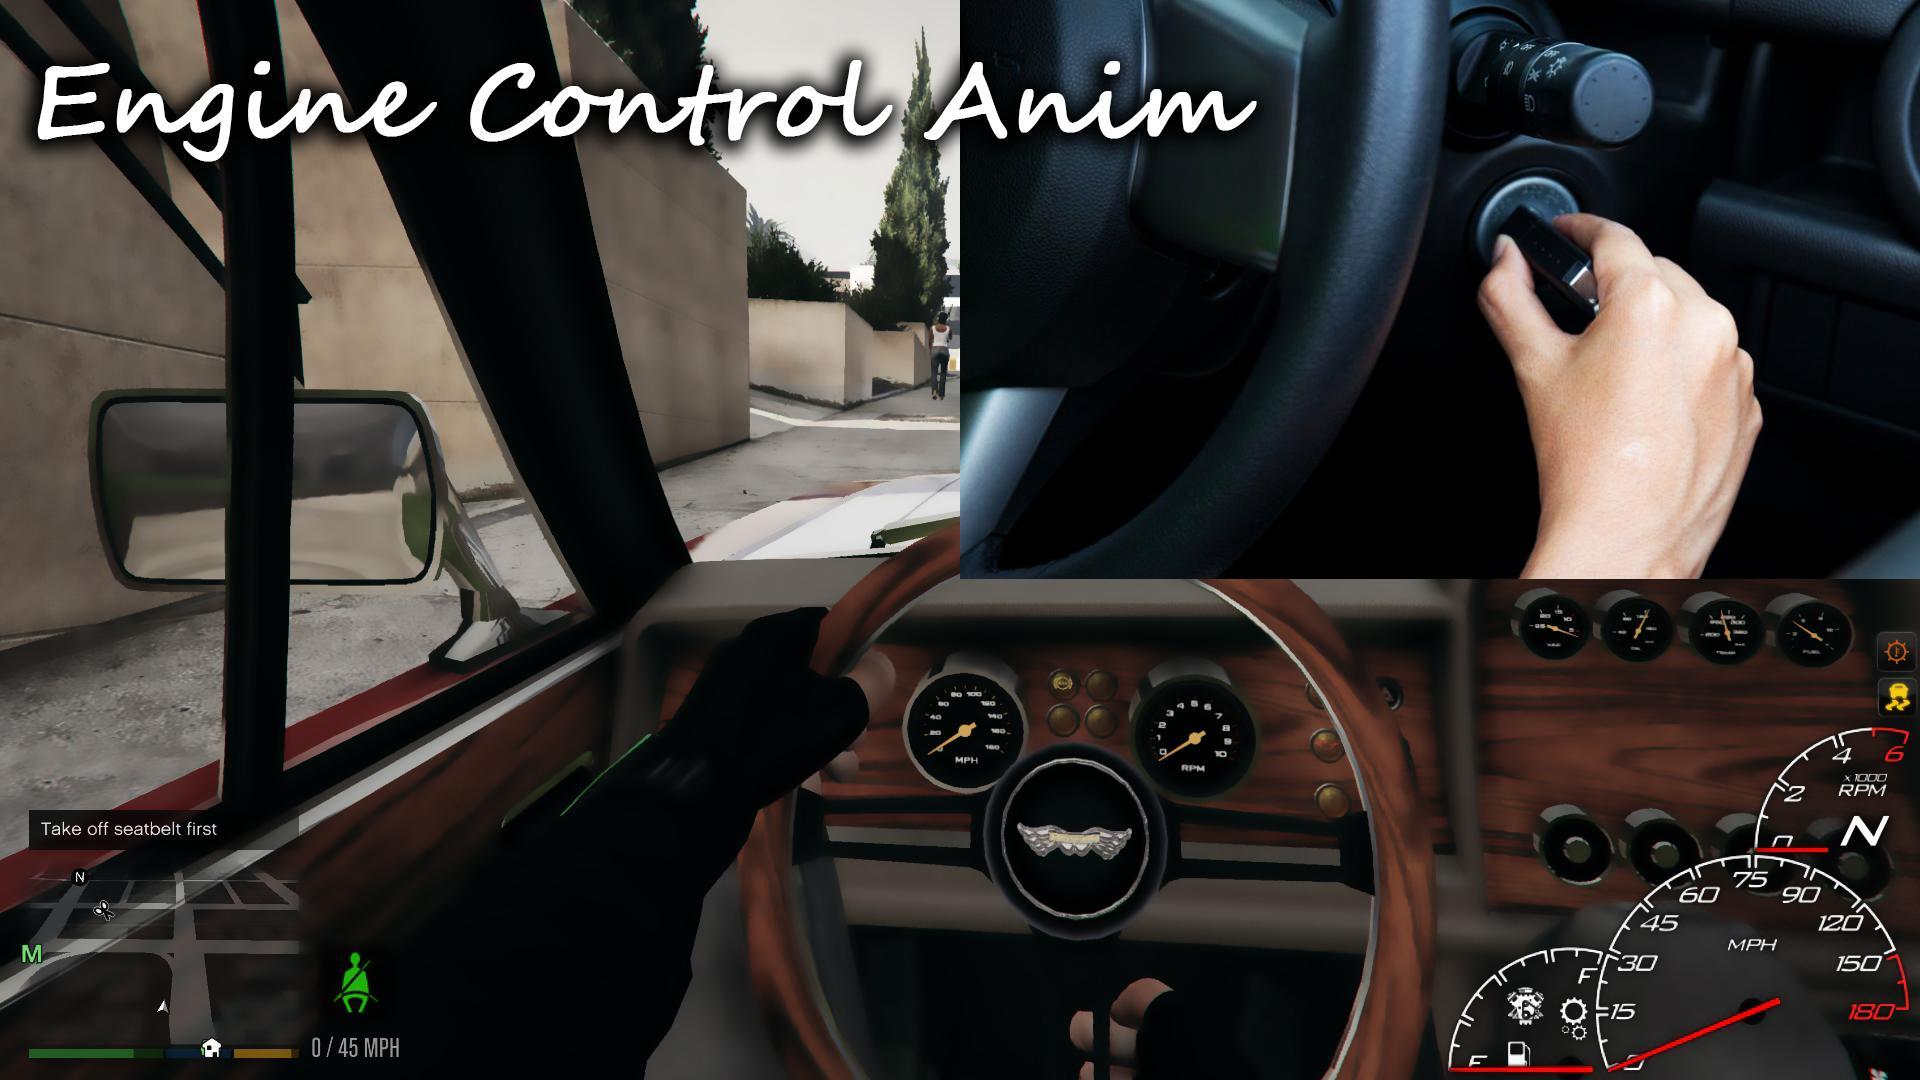 Engine Control Anim